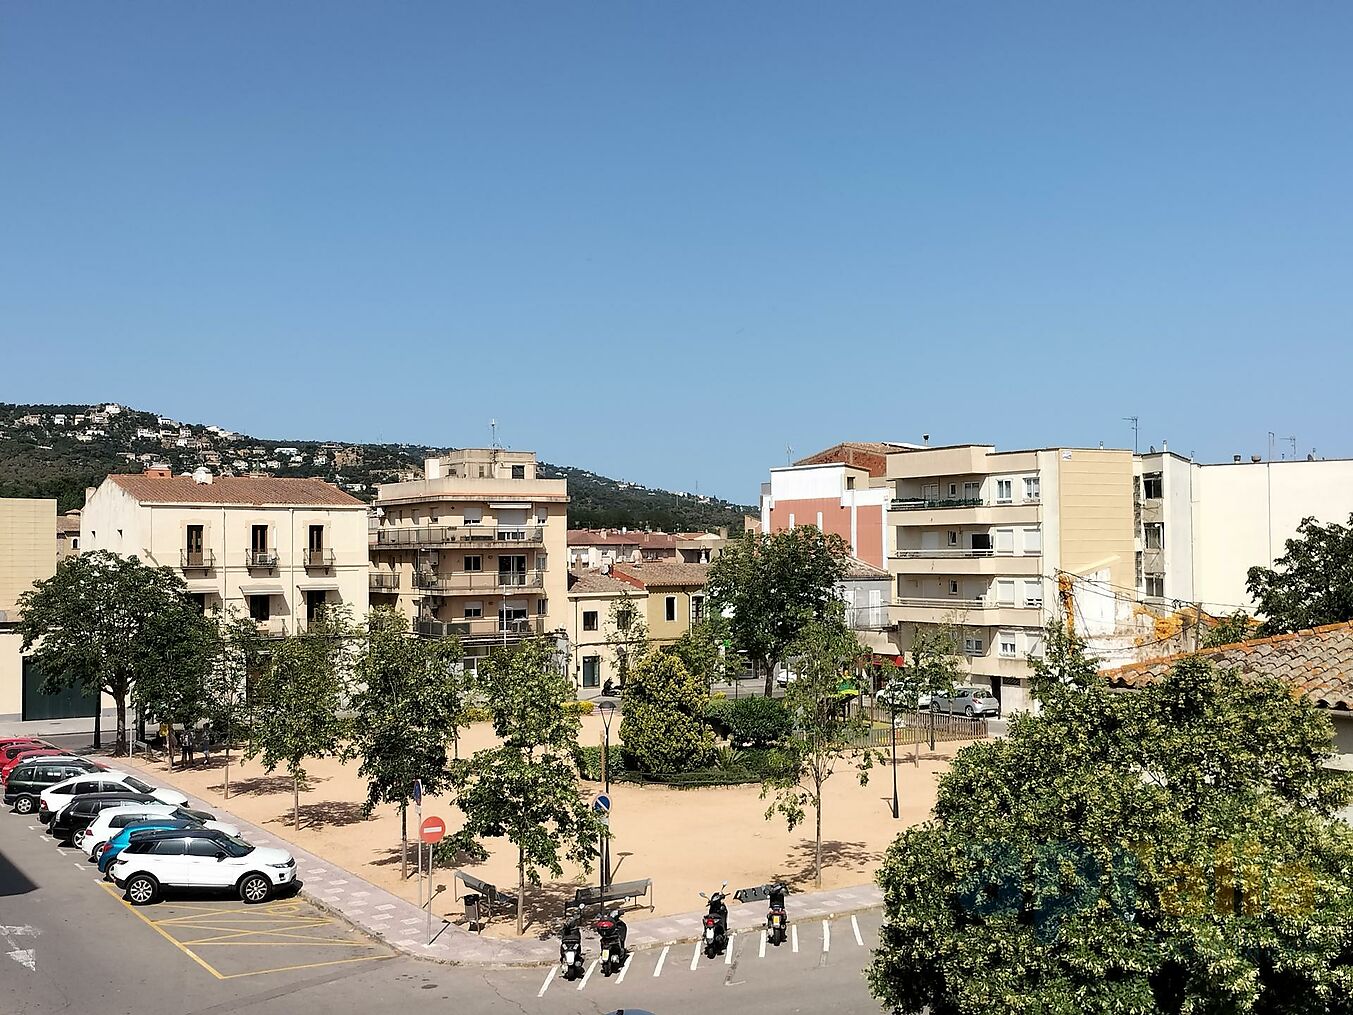 Apartment in the center of Santa Cristina d'Aro